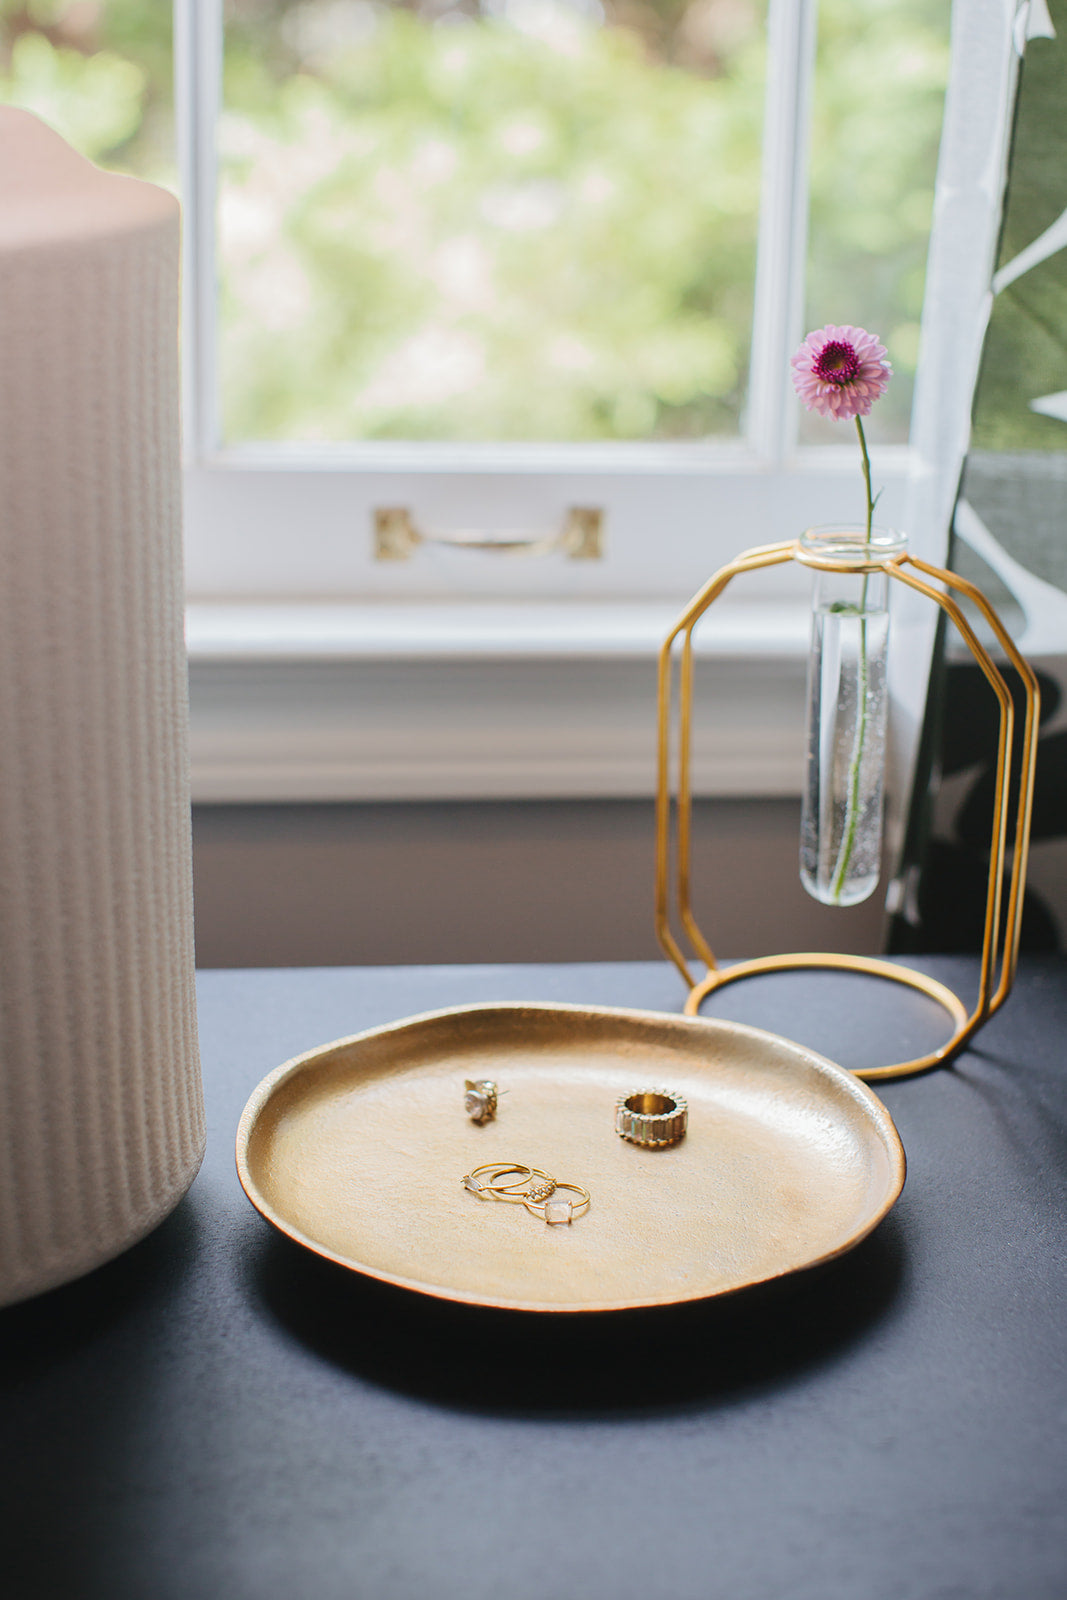 Round, Gold Decorative Dish/Jewelry Tray